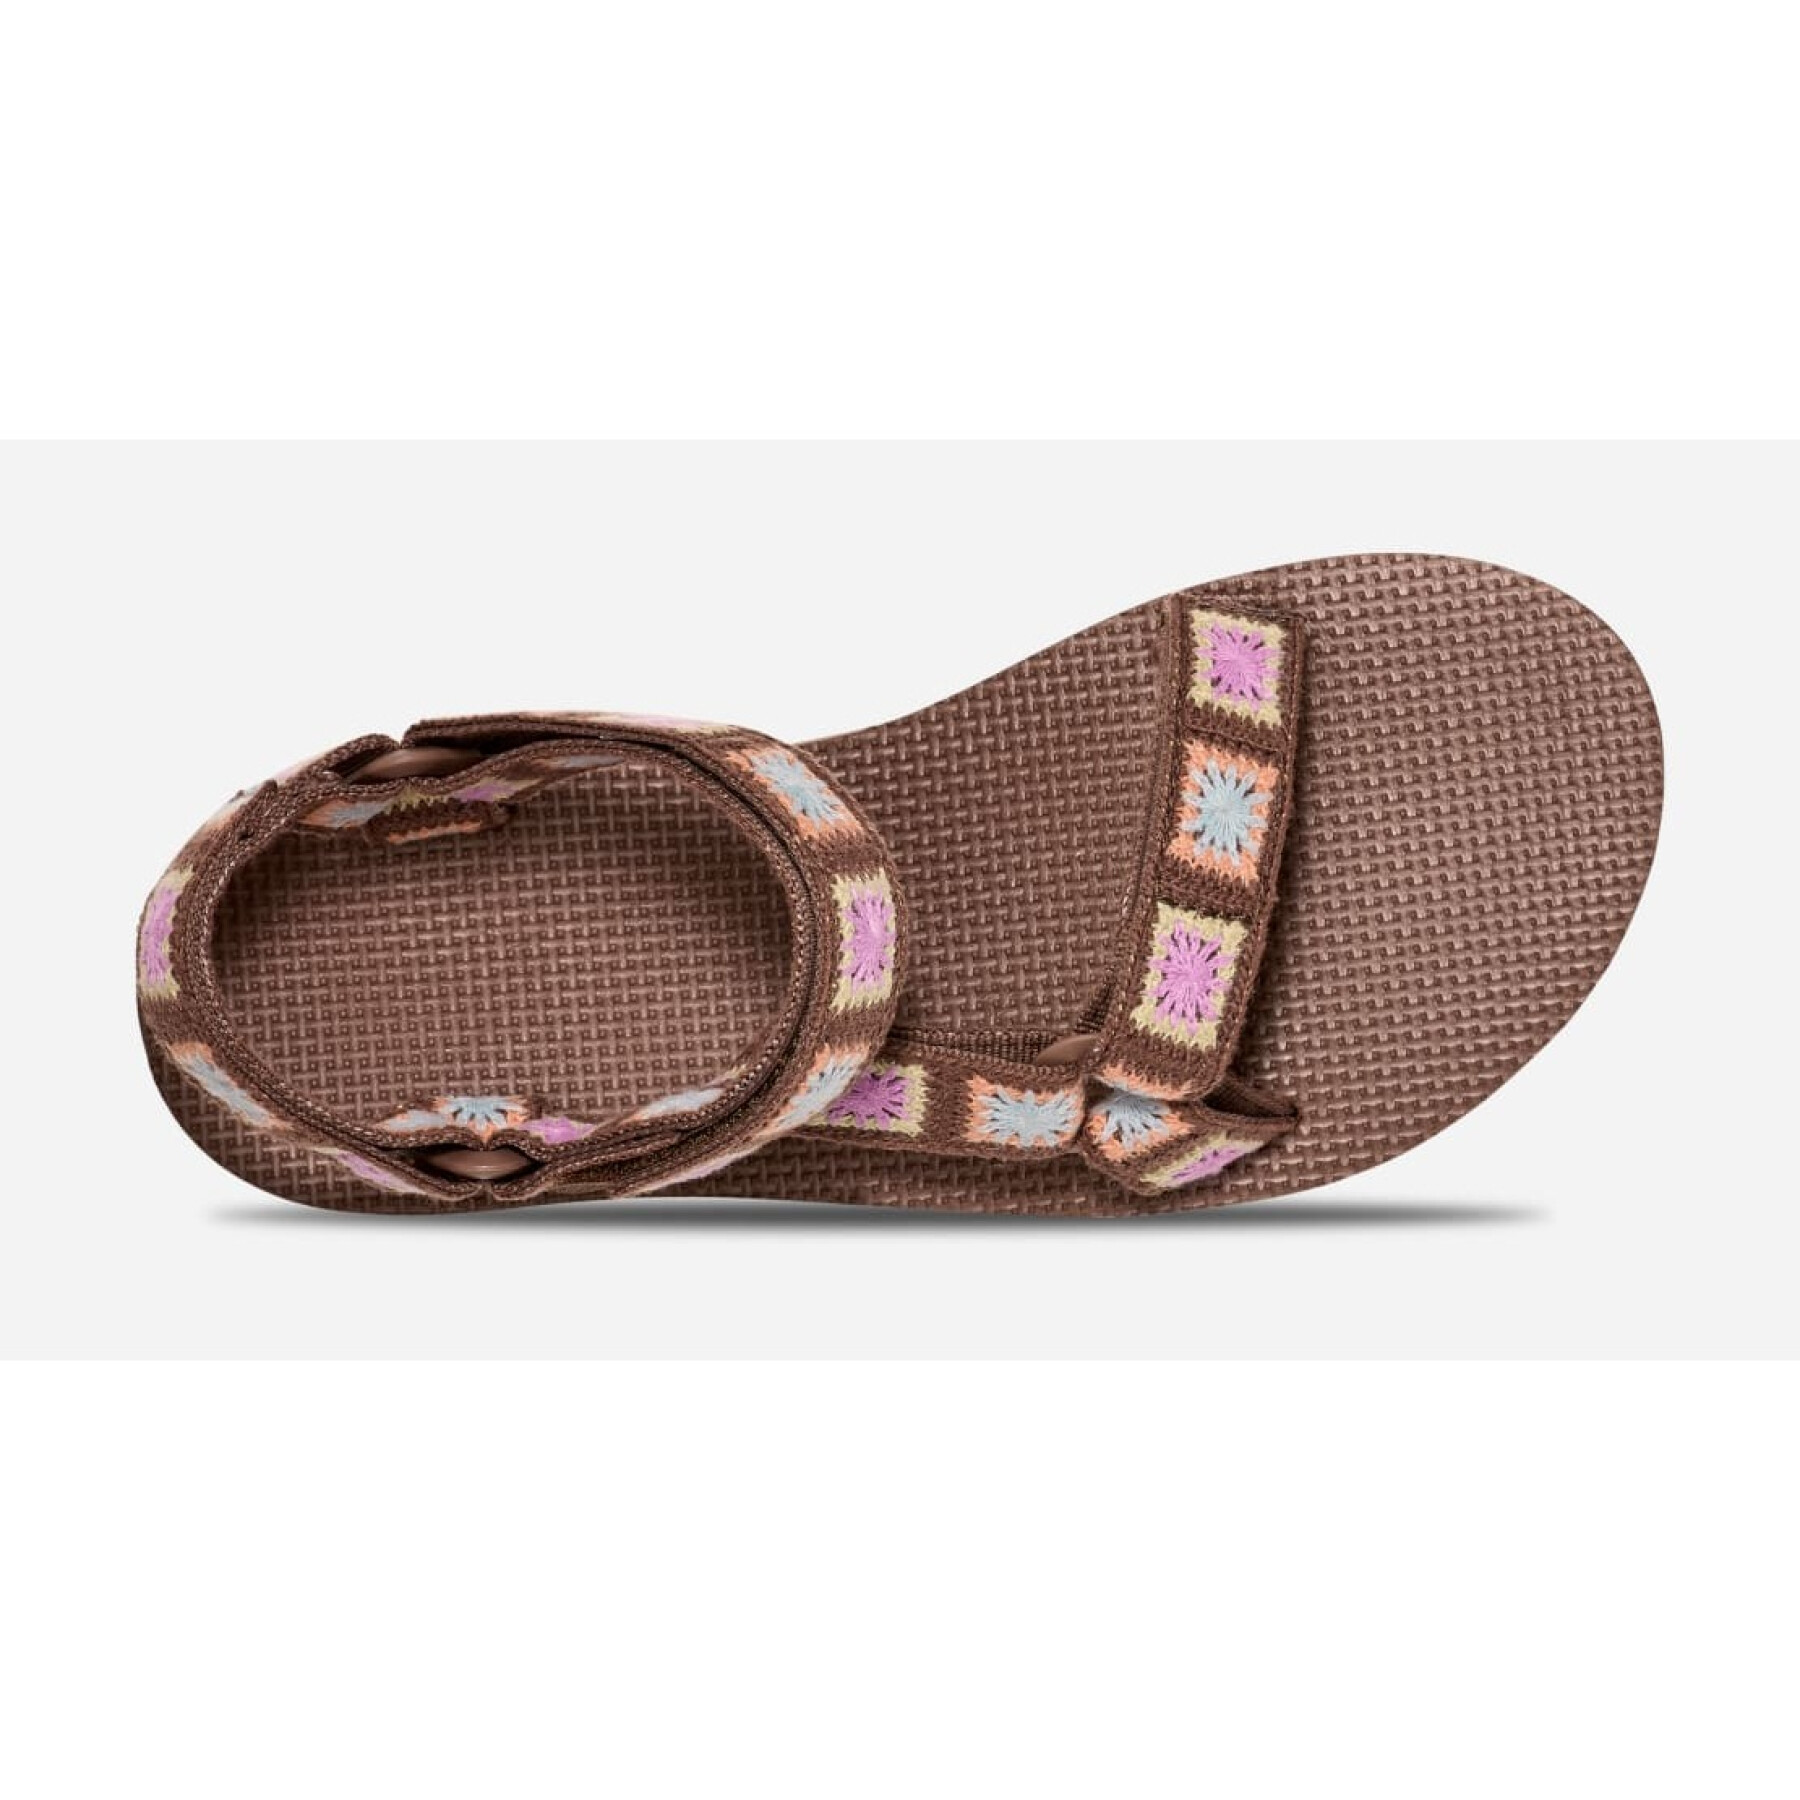 Women's crochet sandals Teva Flatform Universal